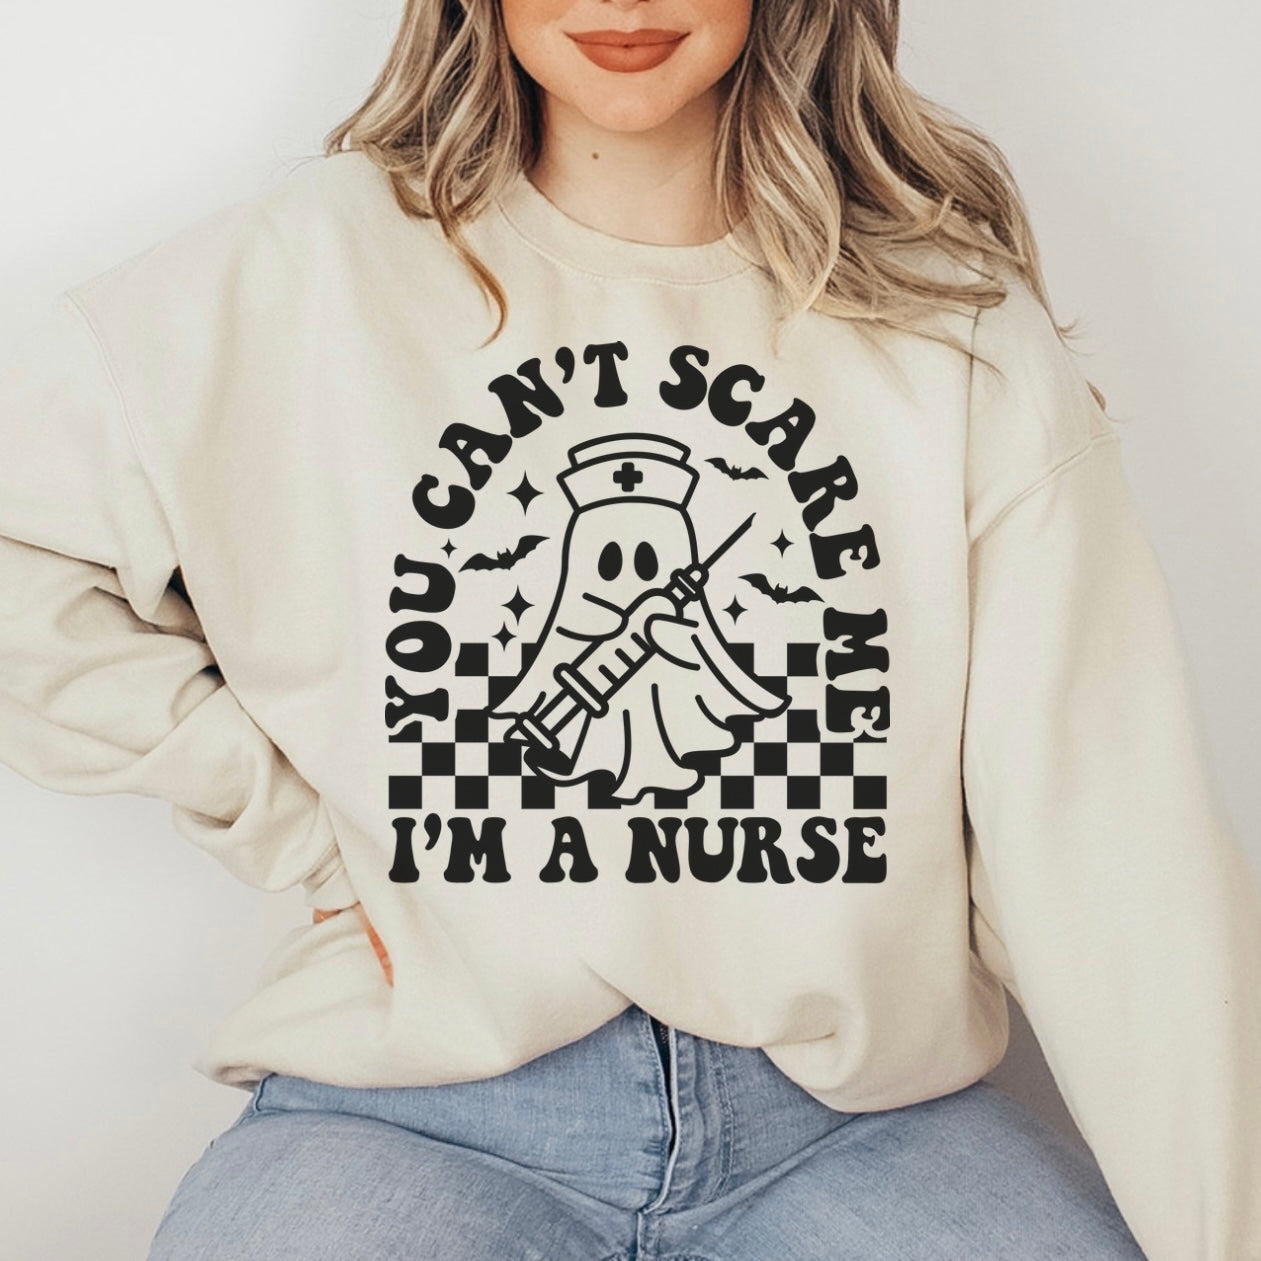 Can’t Scare Me Nurse Sweatshirt